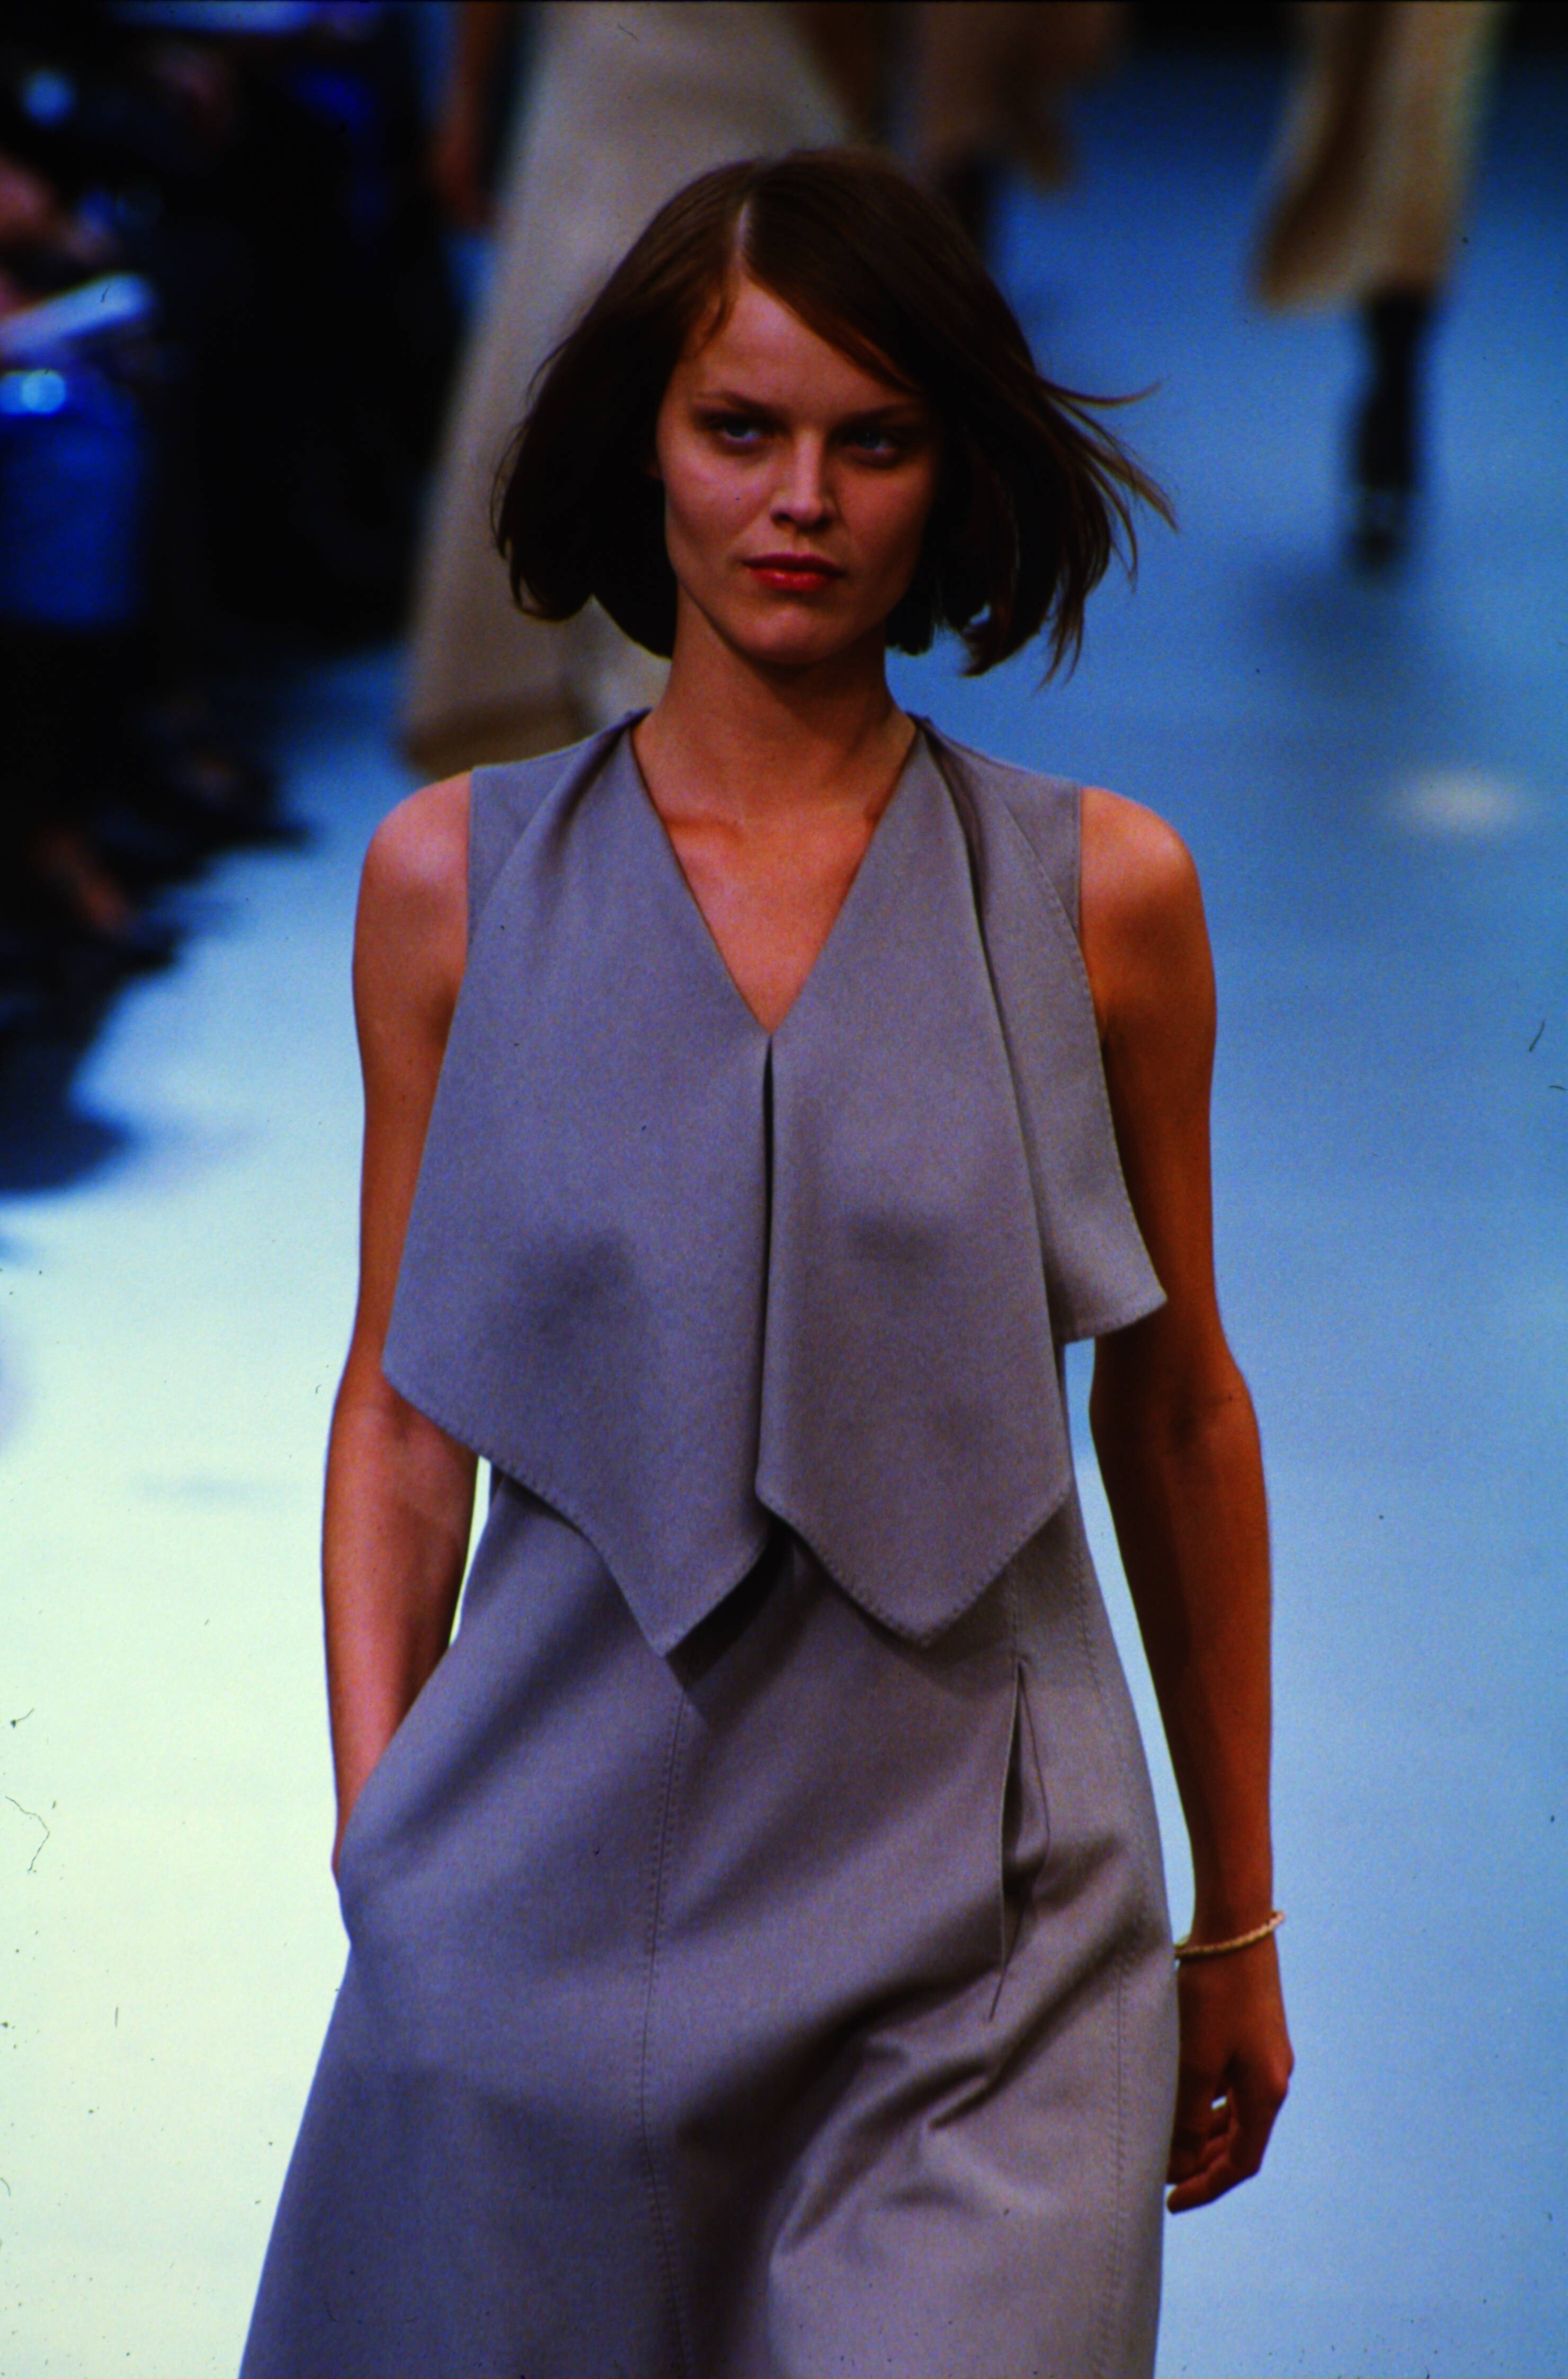 Eva Herzigova for Louis Vuitton Spring/Summer 2003 Photographed by